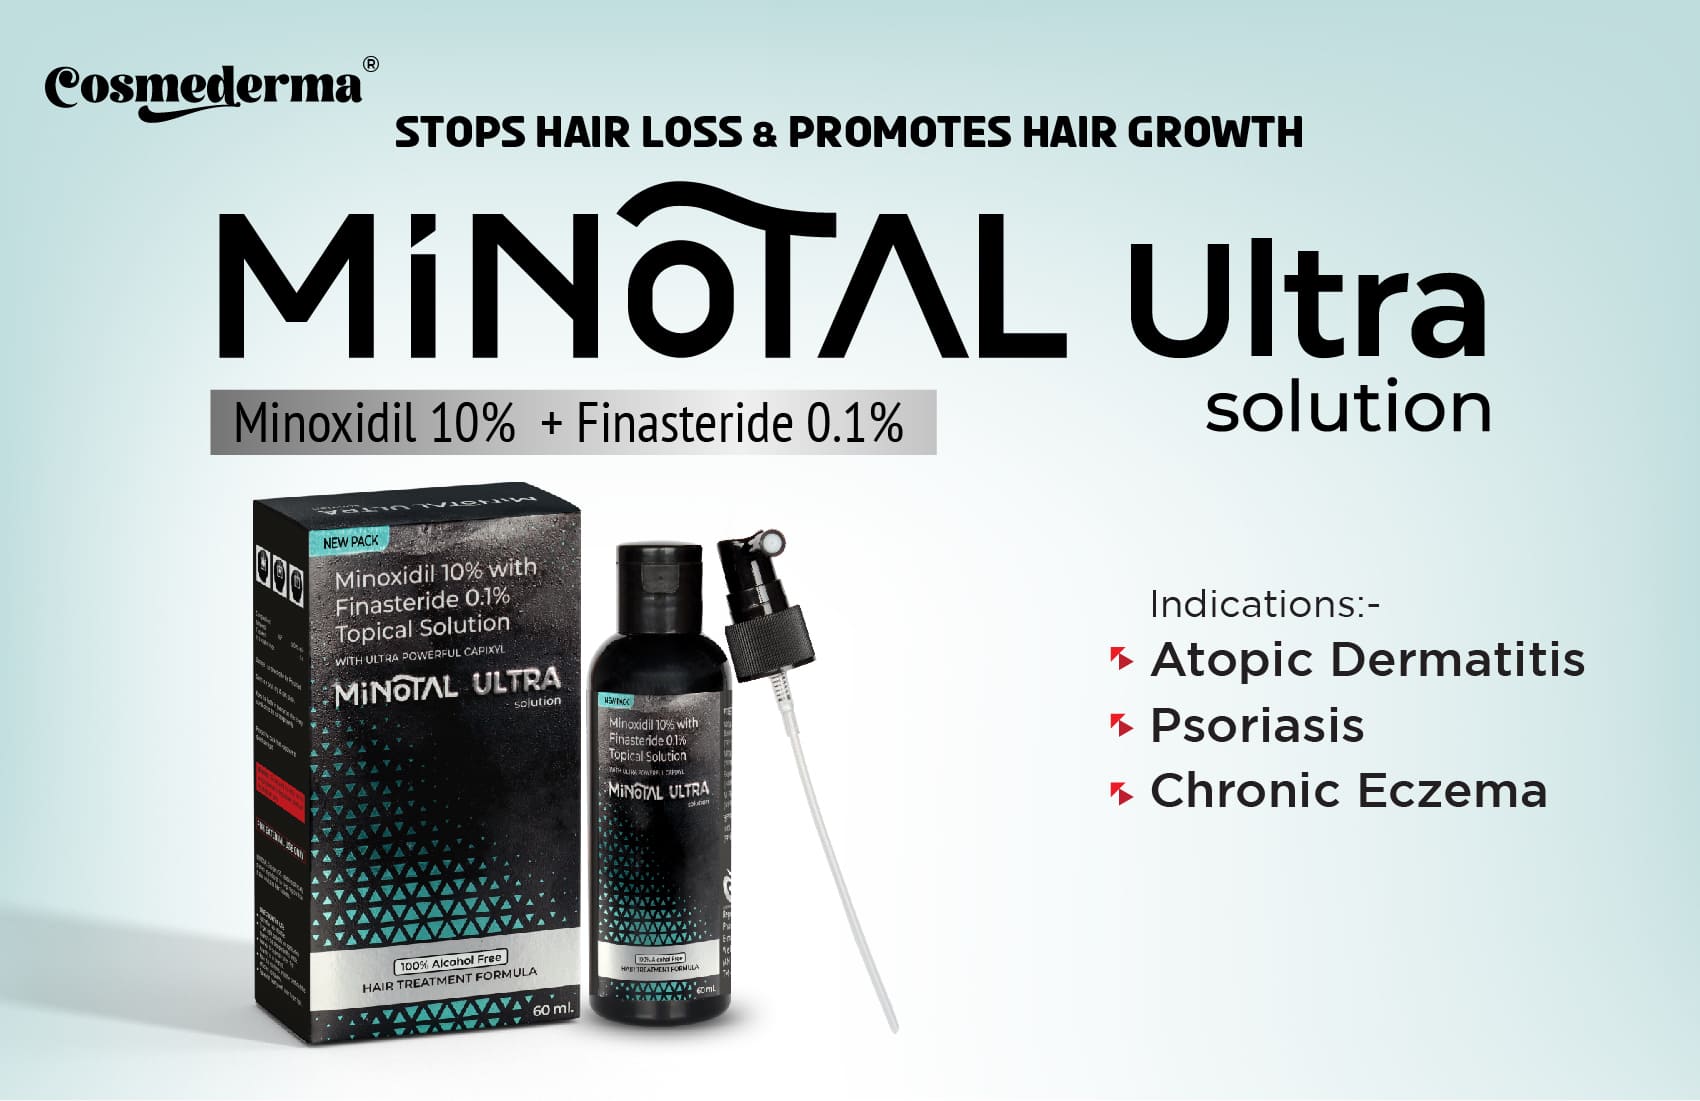 Minoxidil 10% + Finasteride 0.1% Solution